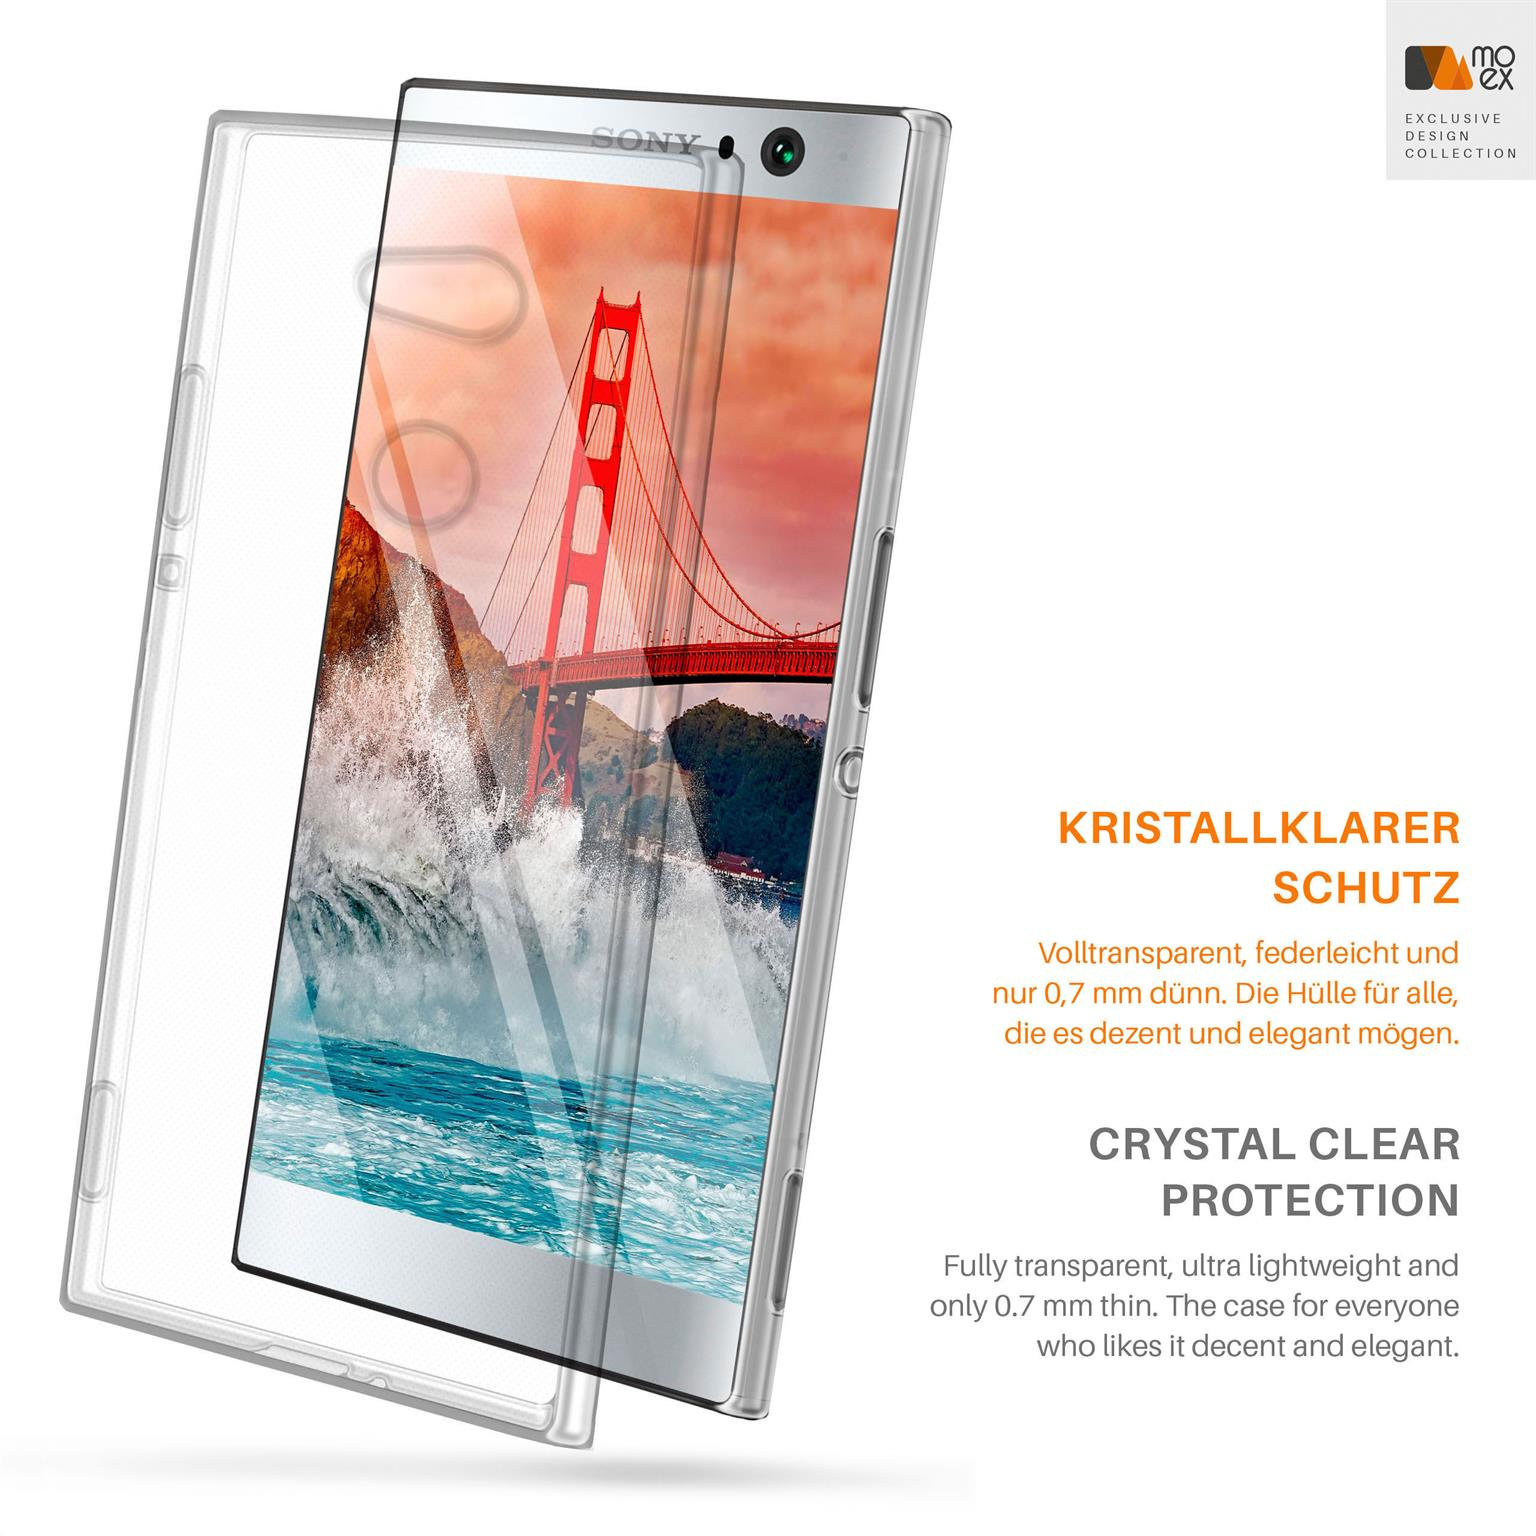 Crystal-Clear Case, Xperia Backcover, XA2, Aero MOEX Sony,